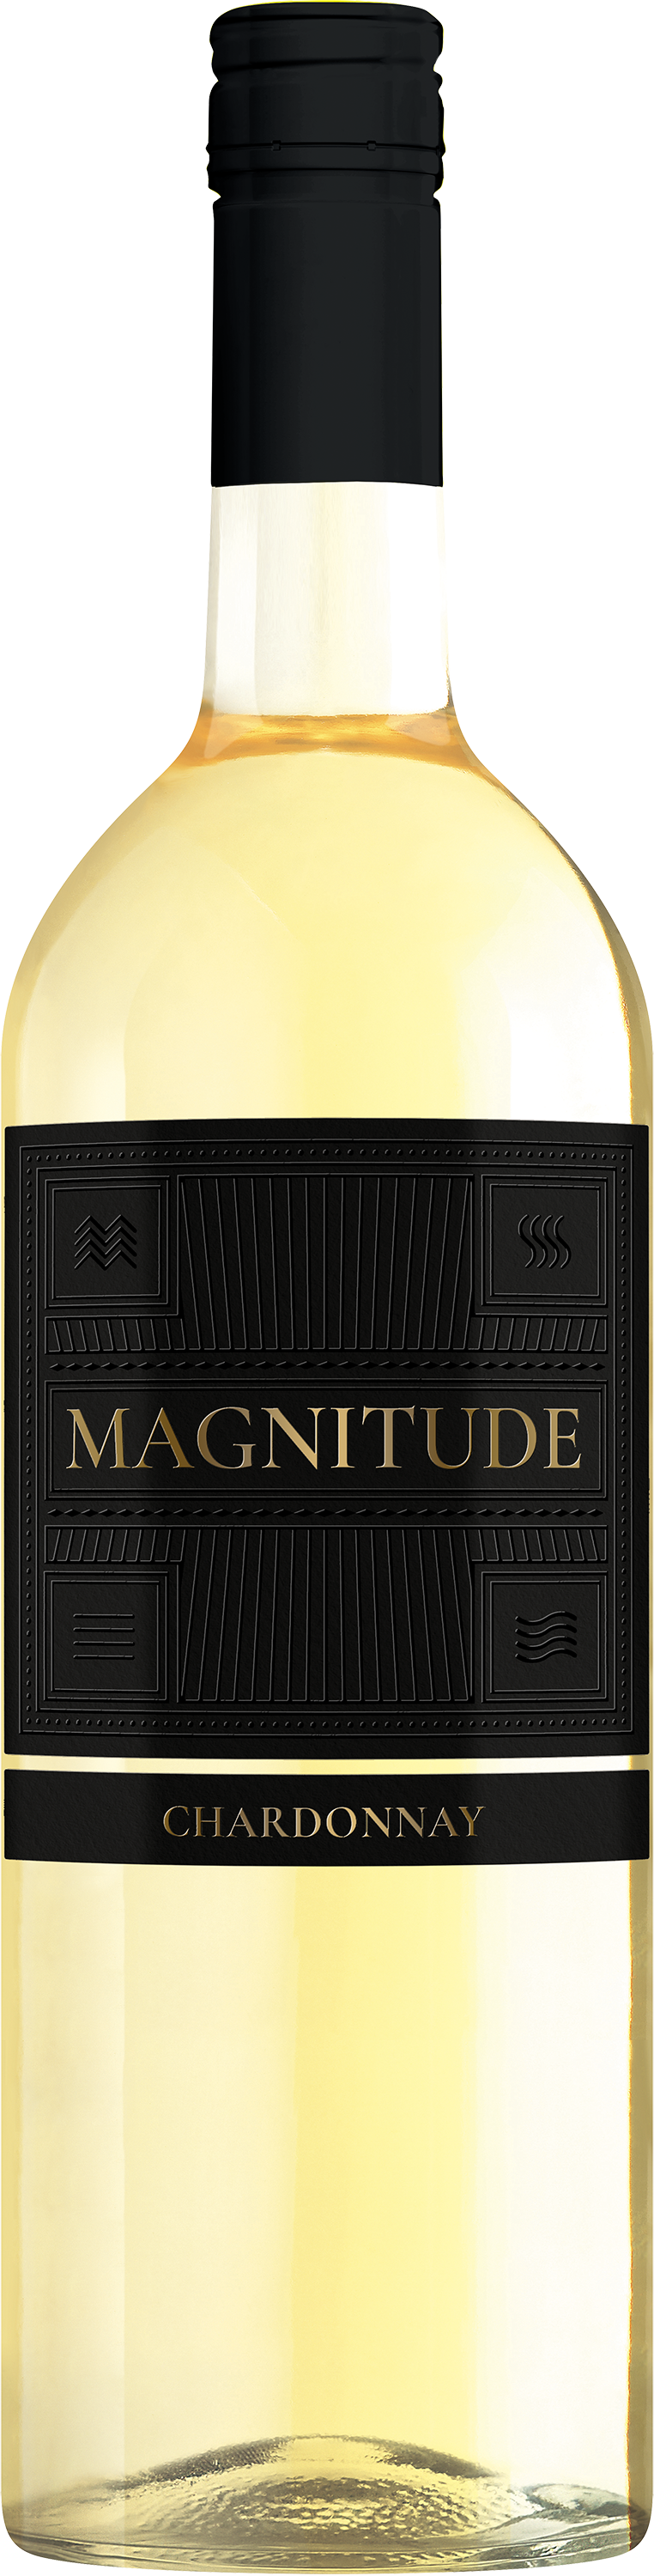 Magnitude Chardonnay